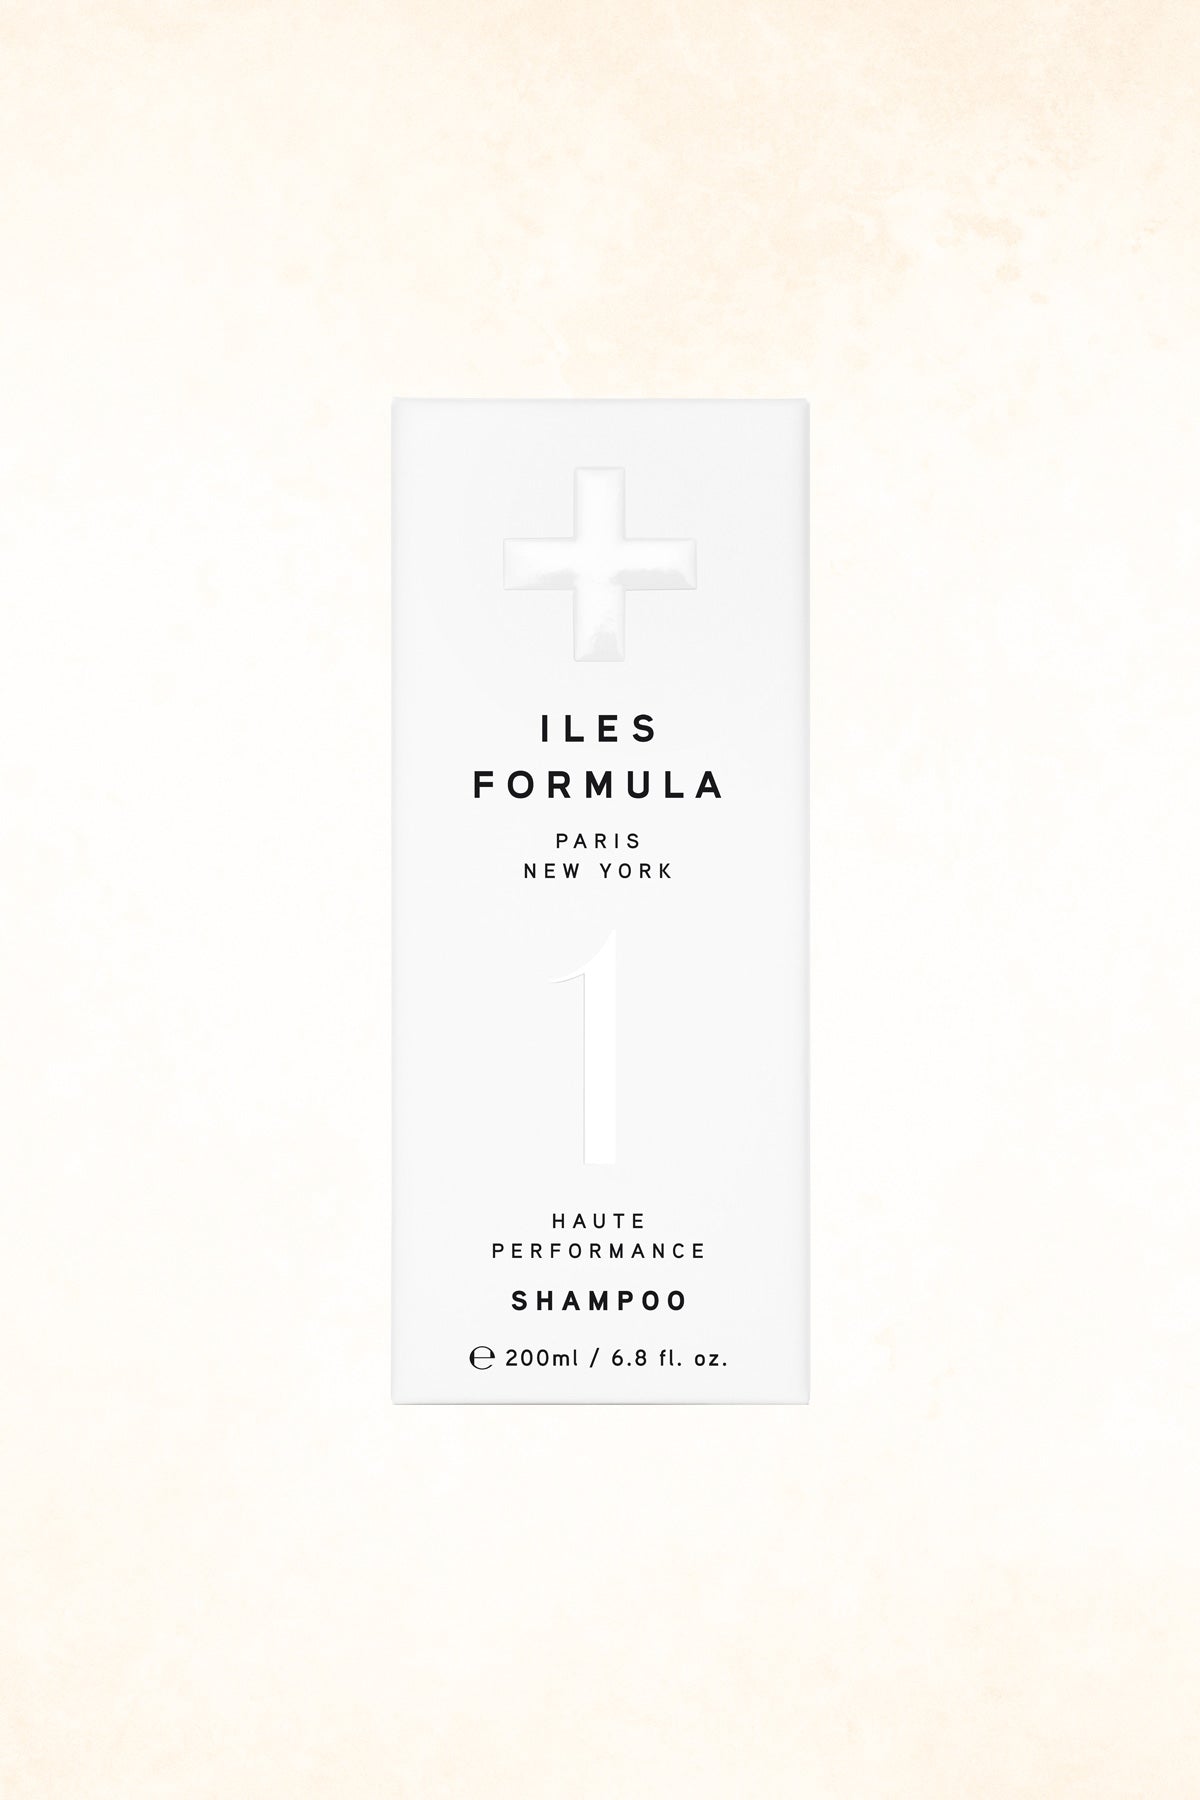 Iles Formula – Haute Performance Shampoo – 200 ml